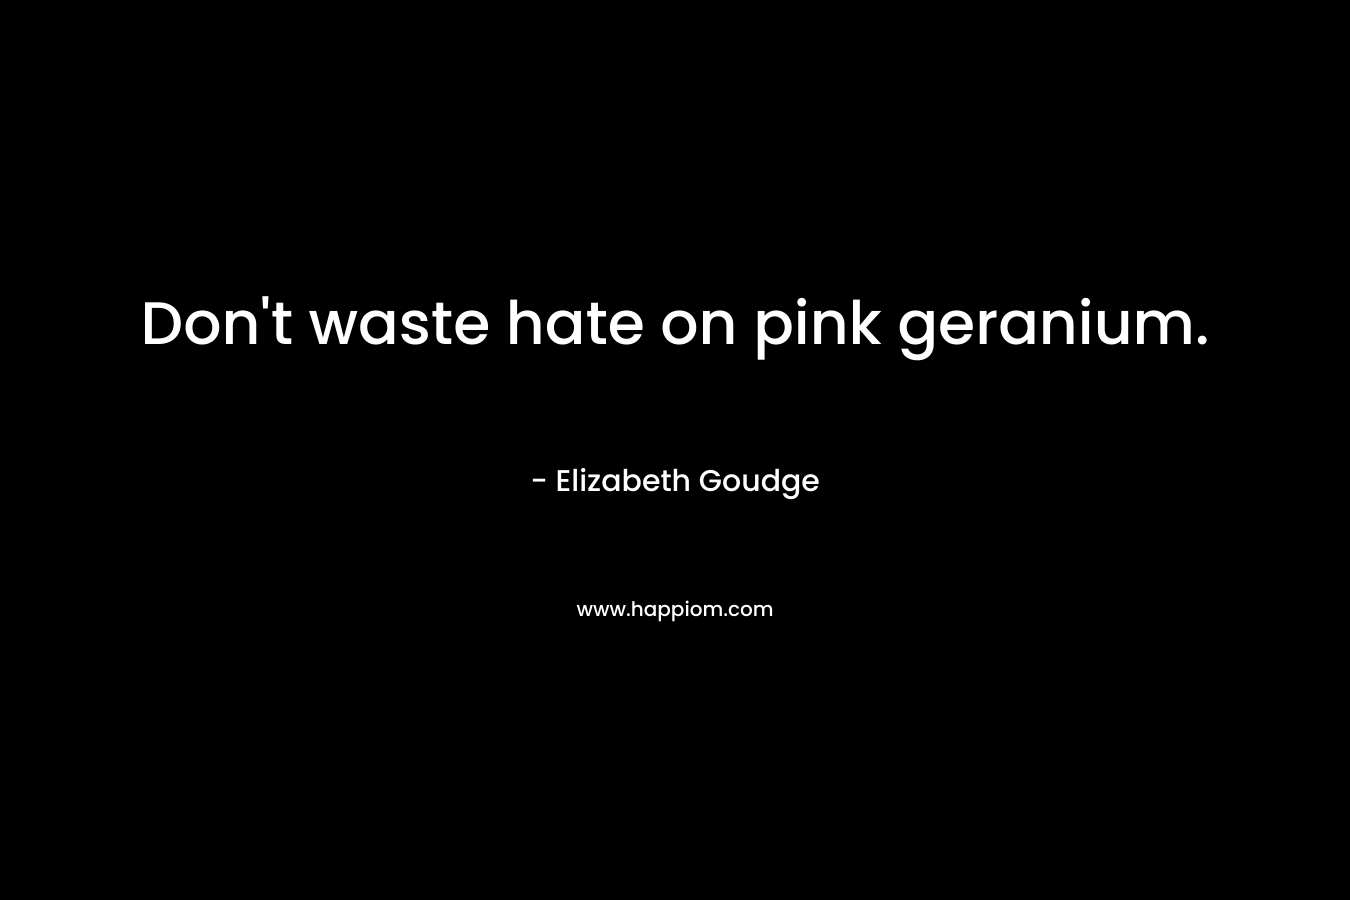 Don't waste hate on pink geranium.